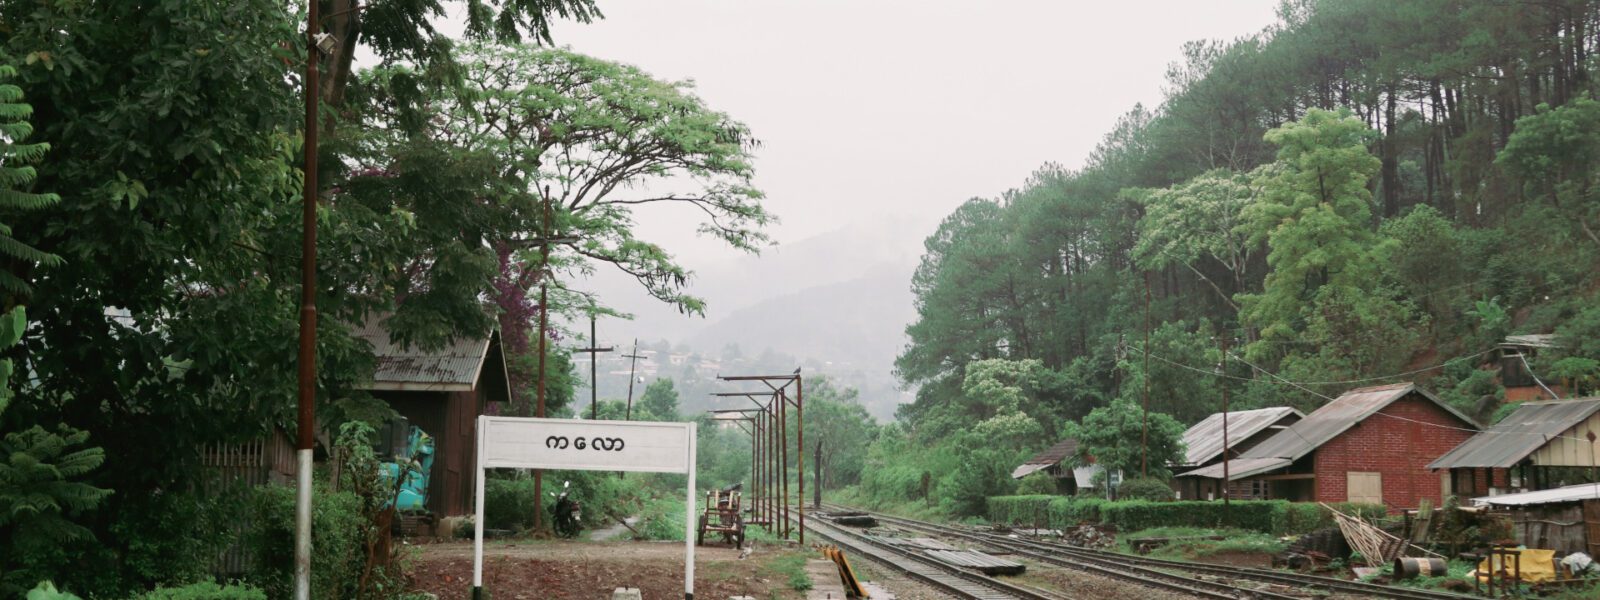 Train station at Kalaw, Myanmar; cloudy, misty sky